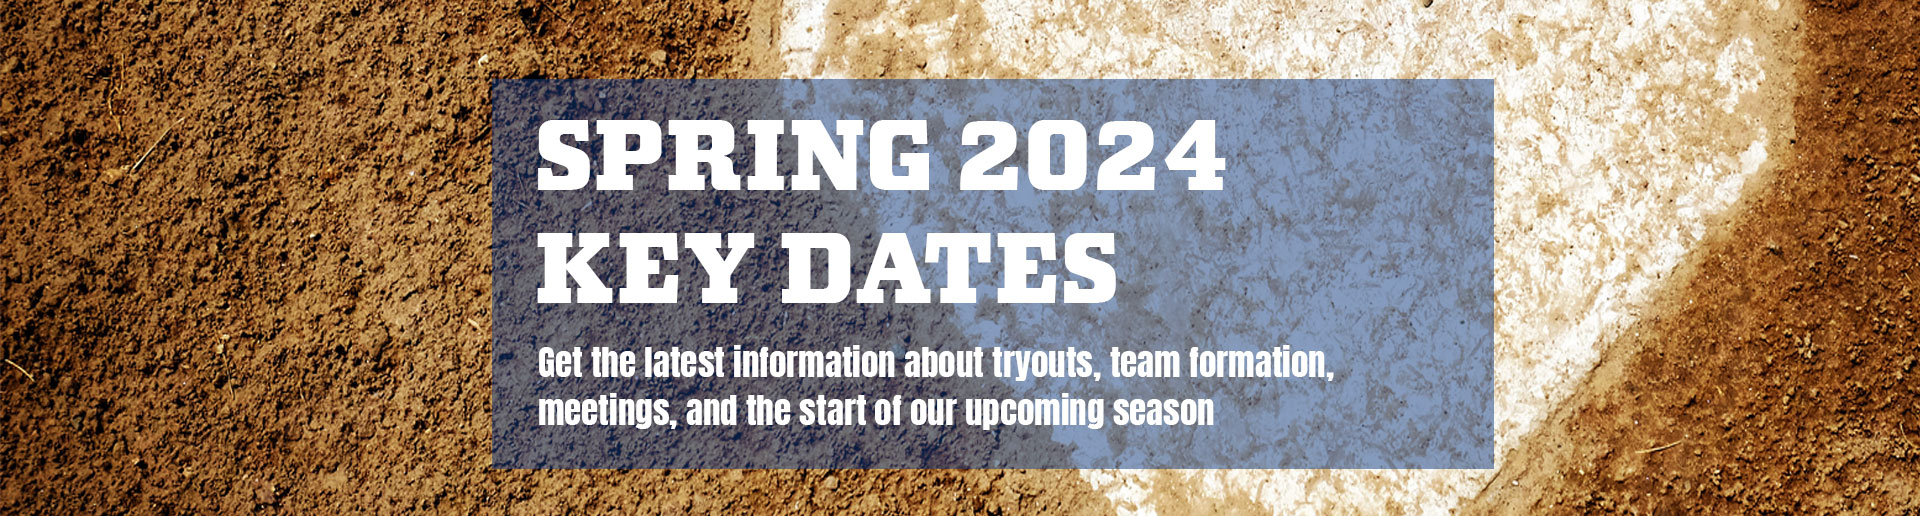 Spring 2024 Key Dates